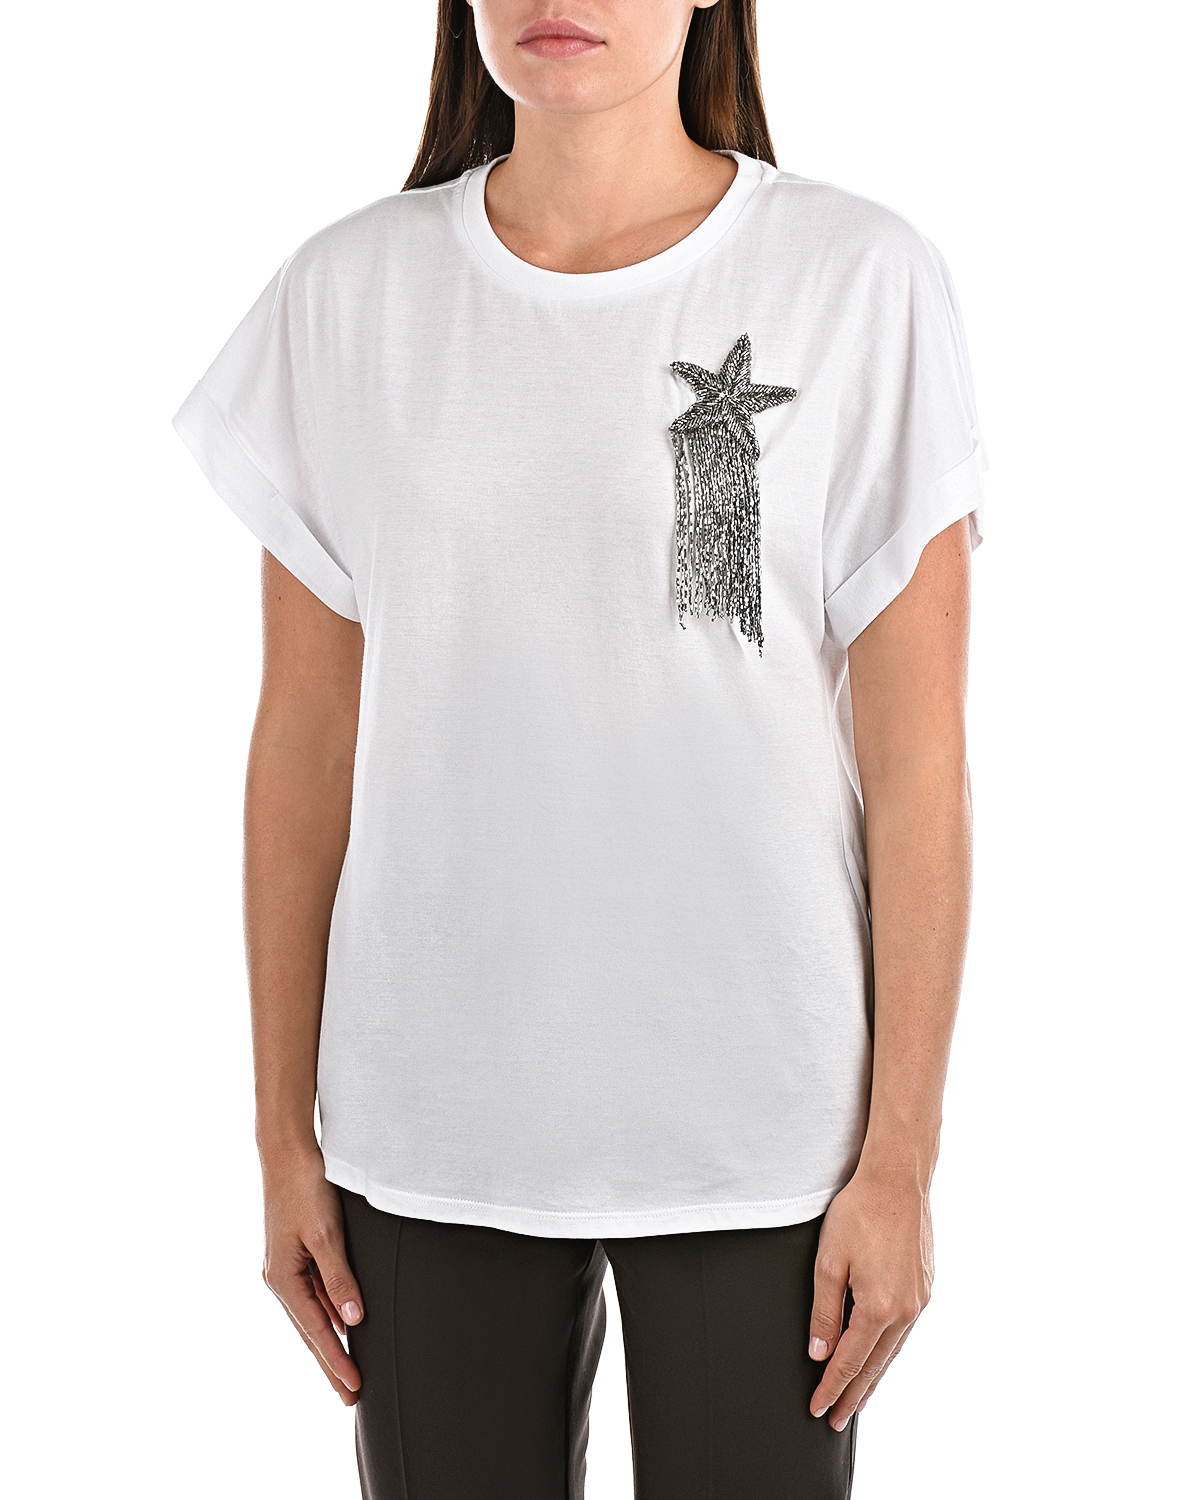 Белая футболка с вышивкой "Звезда" TWINSET, размер 38, цвет белый - фото 8